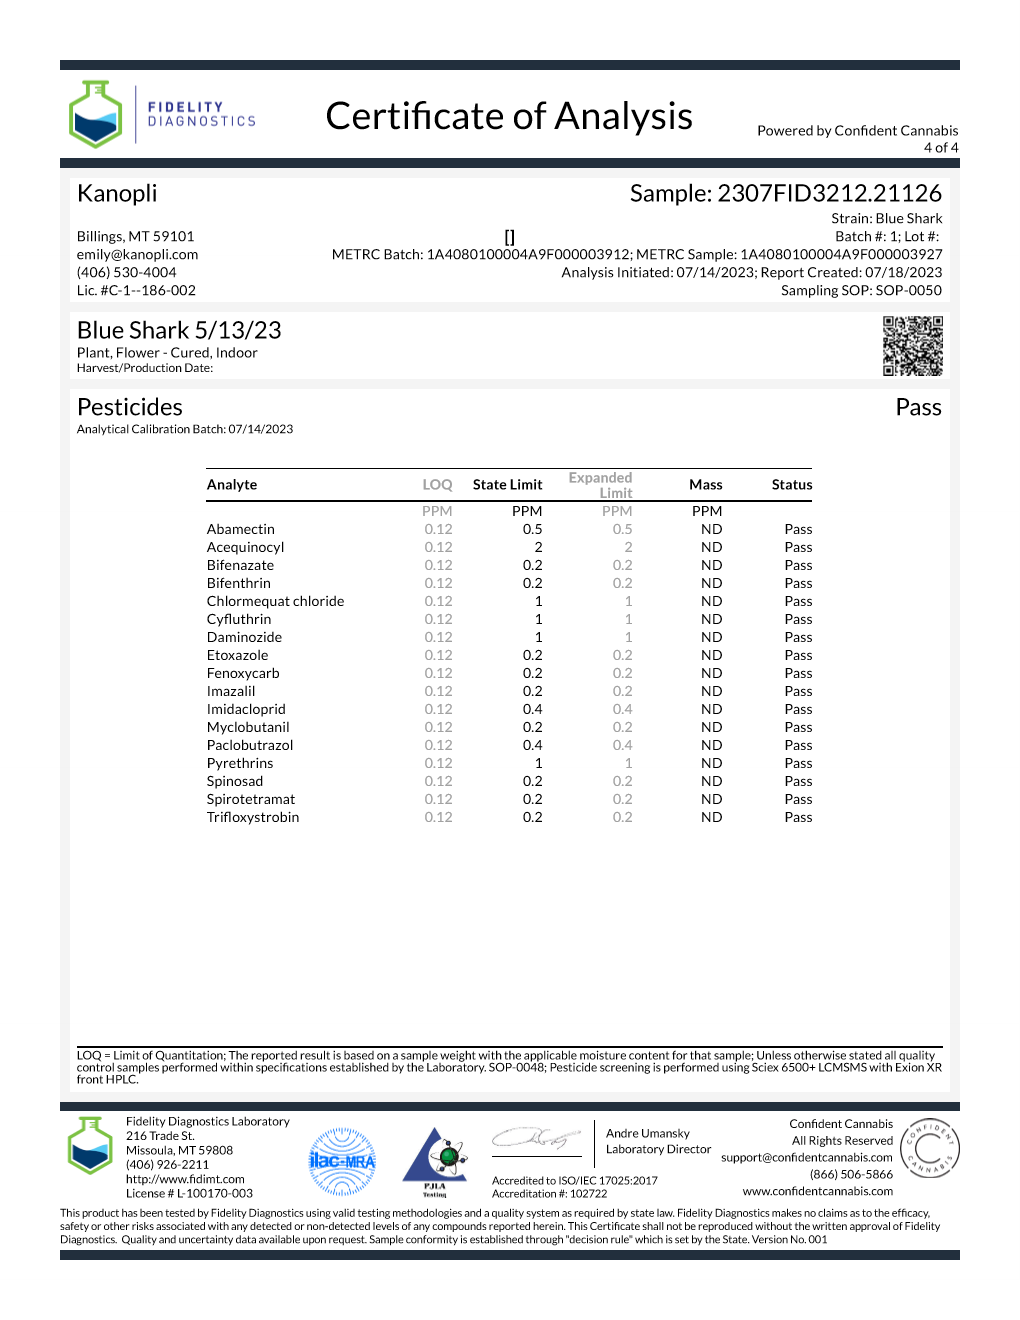 Blue Shark - Hybrid 14% THC (May 2023) shorties (2.50 grams)